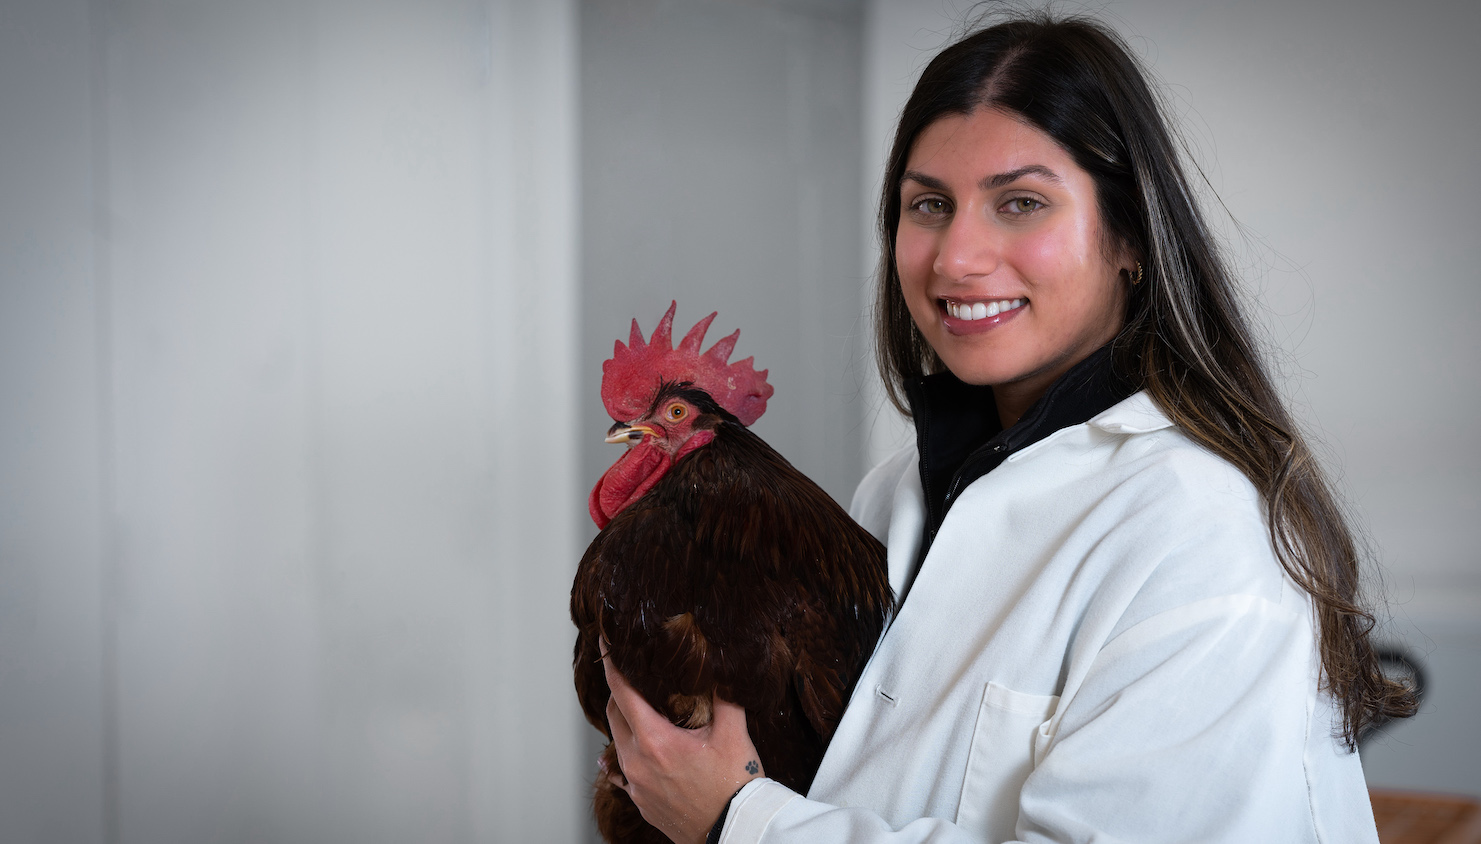 Bhavisha Gulabrai holding a chicken